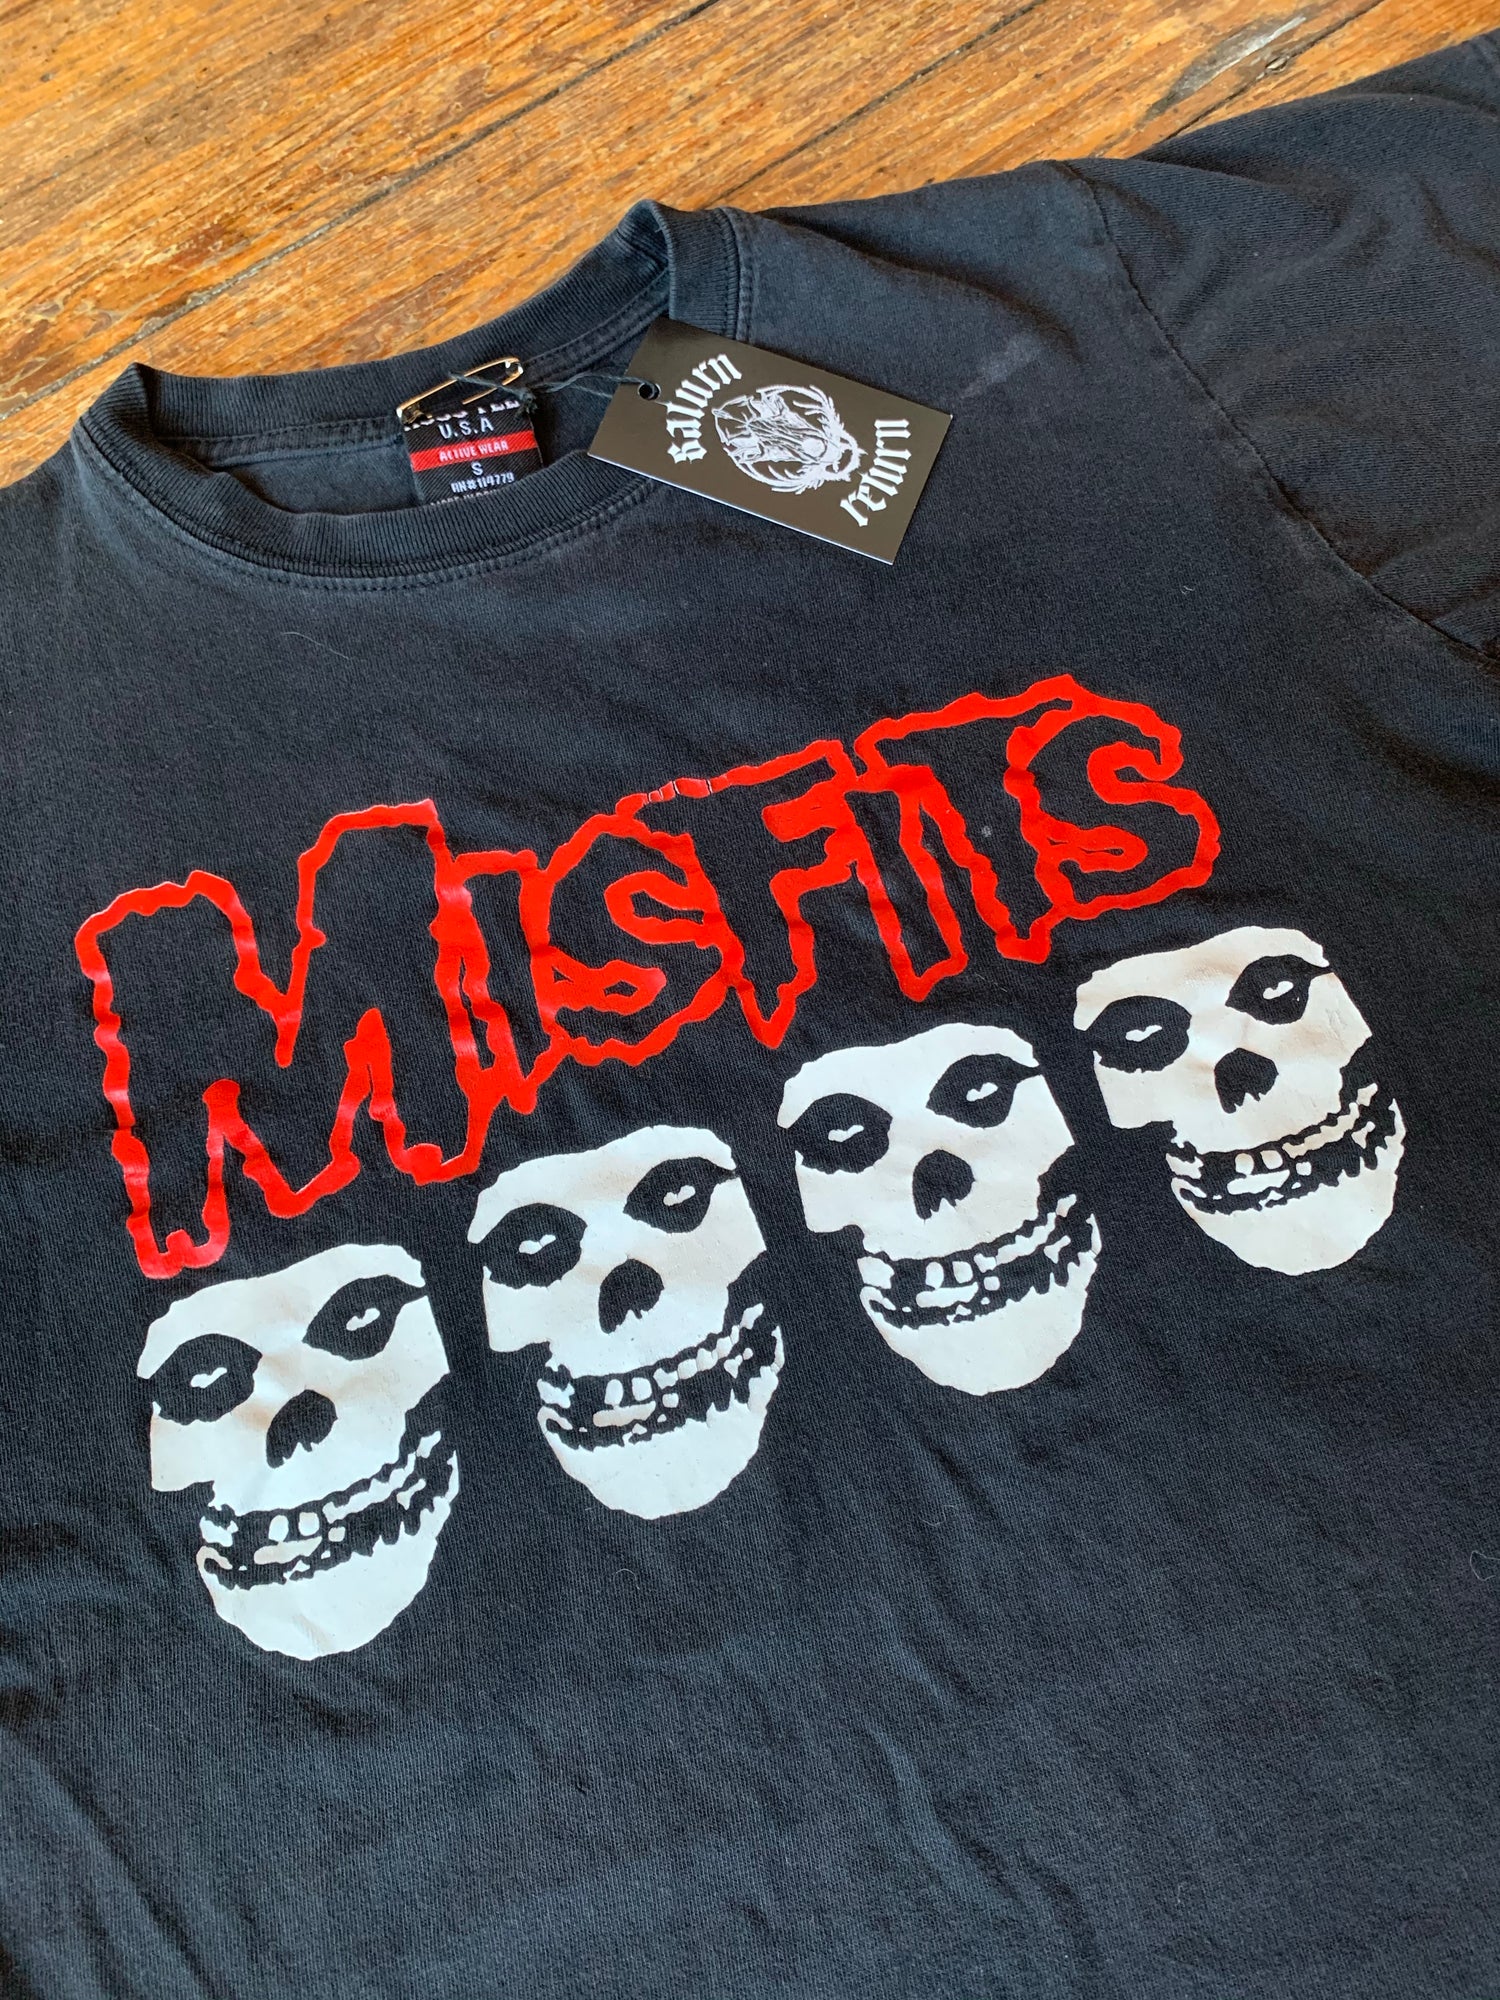 MISFITS - Skulls -- Backpatch